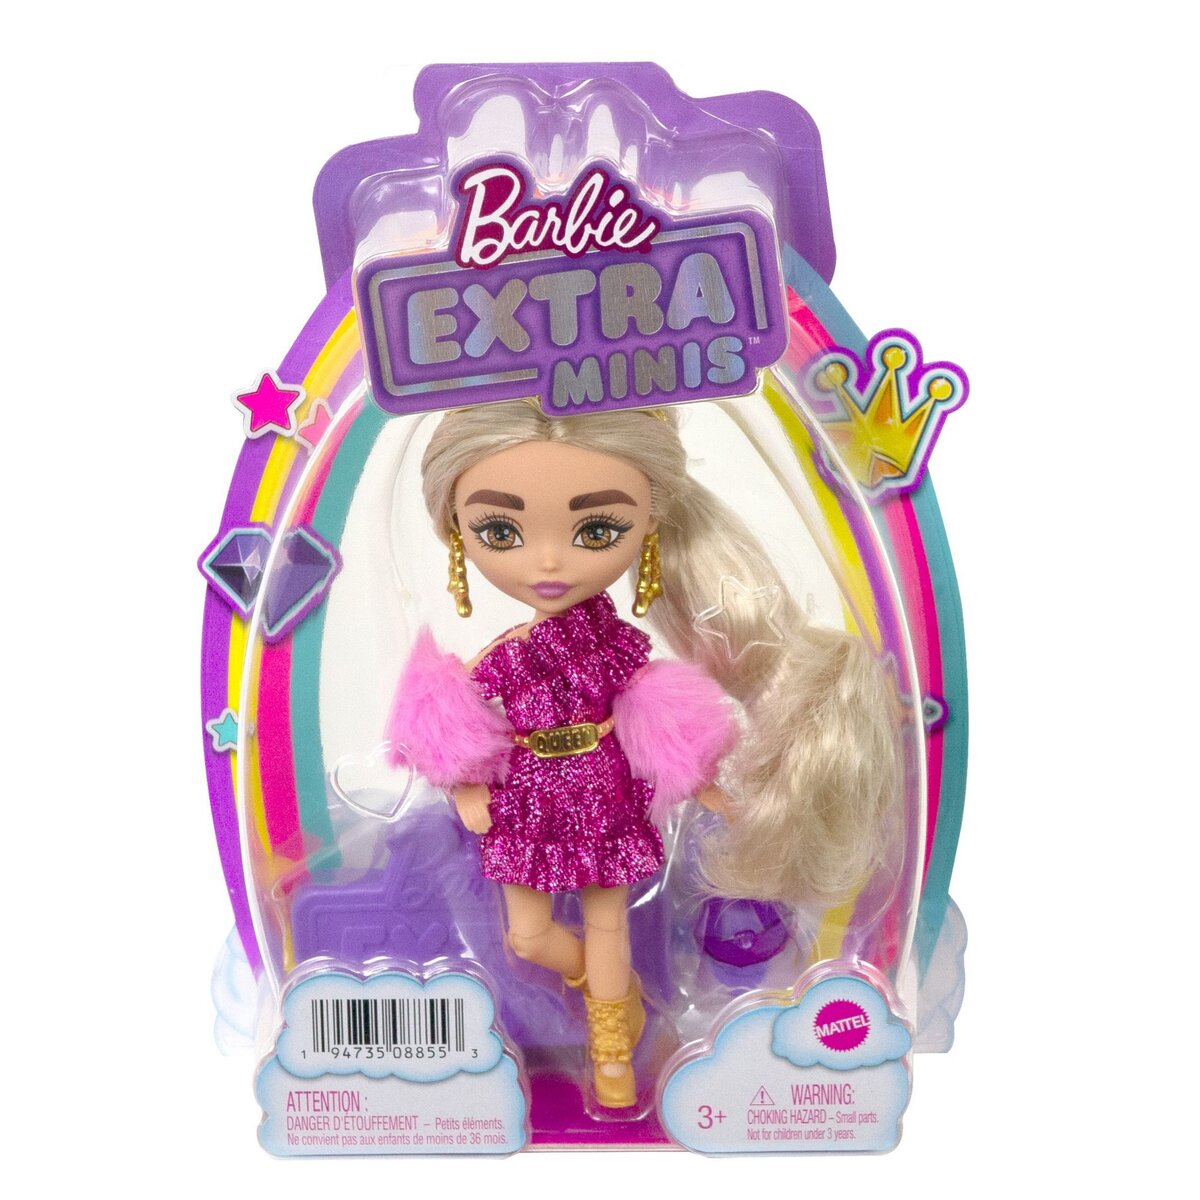 BARBIE Poupée Barbie extra mini